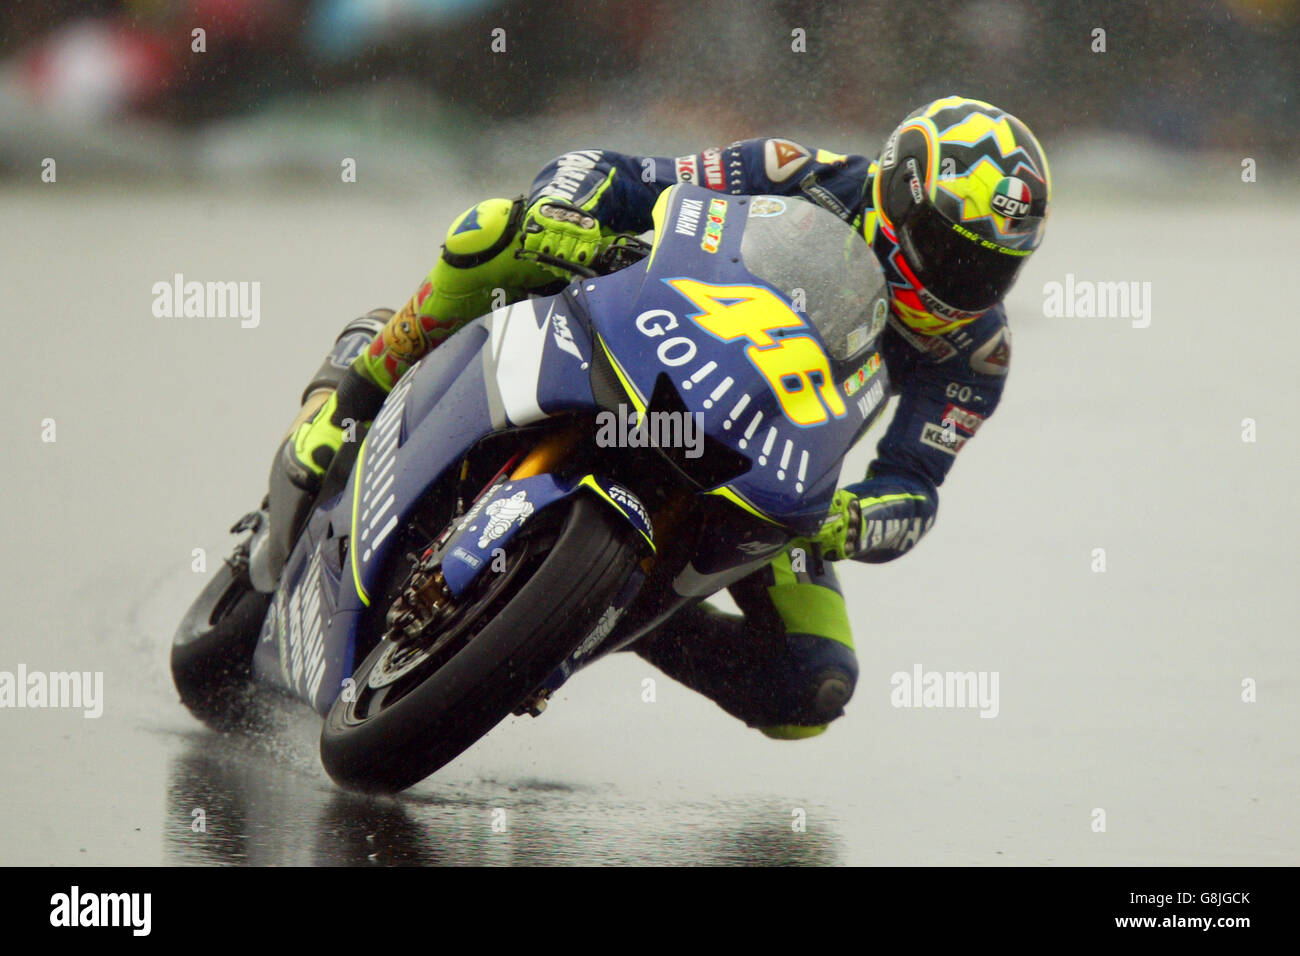 Motorcycling - British Grand Prix - Moto GP - Race - Donnington Park.  Valentino Rossi, Gauloises Yamaha Team Stock Photo - Alamy